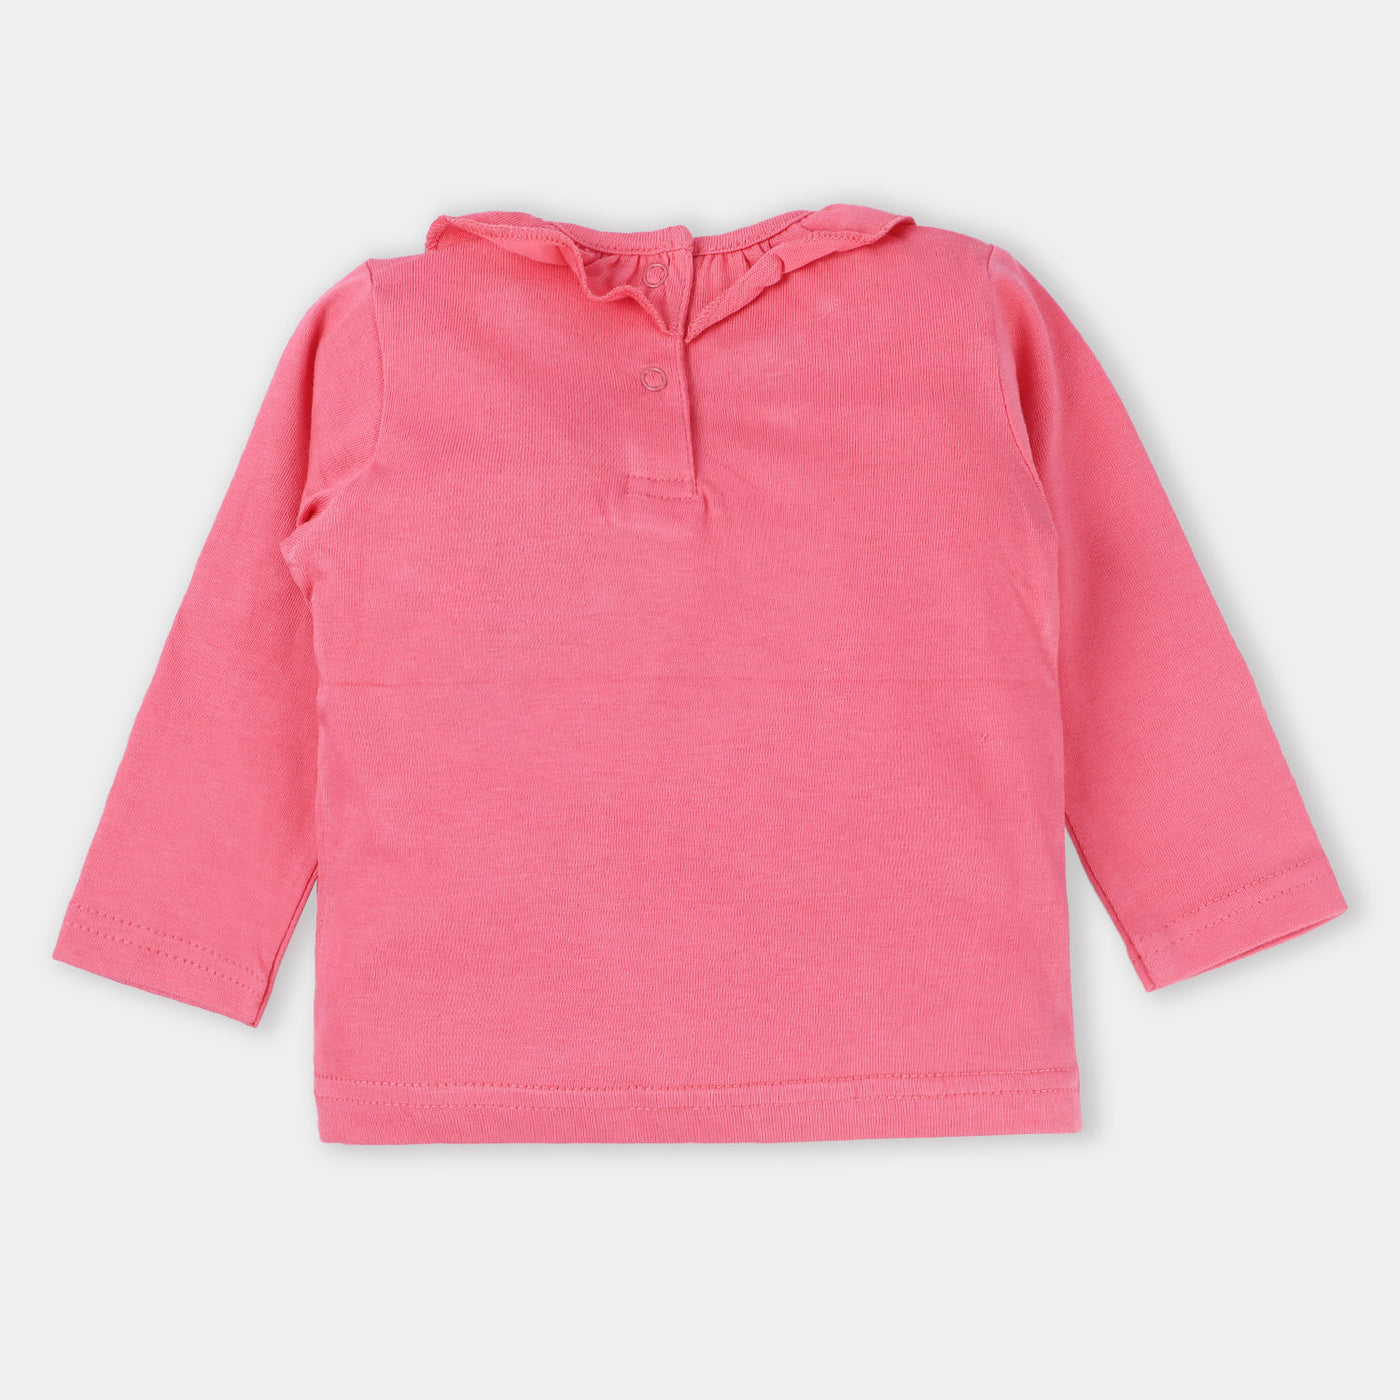 Infant Girls Cotton T-Shirt Character-C.Rose